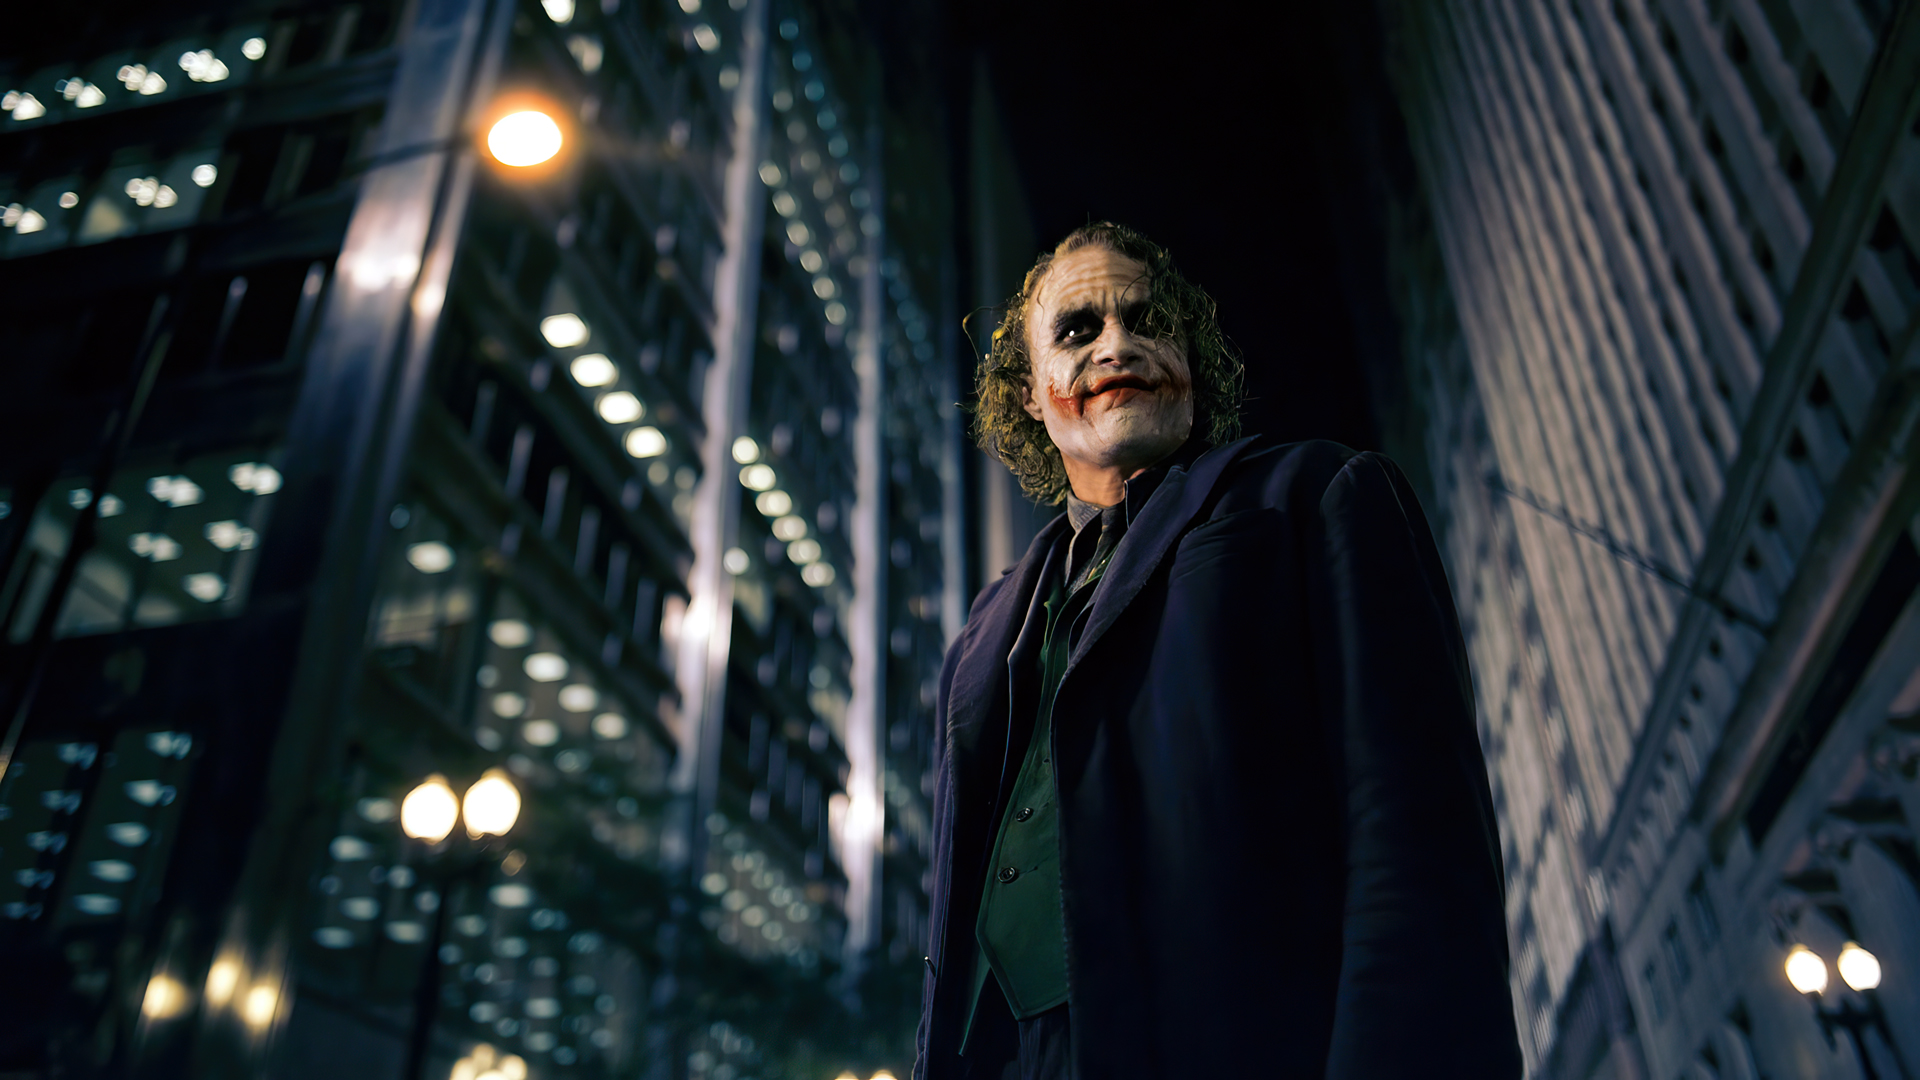 People 1920x1080 The Dark Knight Joker Heath Ledger actor Gotham City movies film stills street light building clown face paint Christopher Nolan